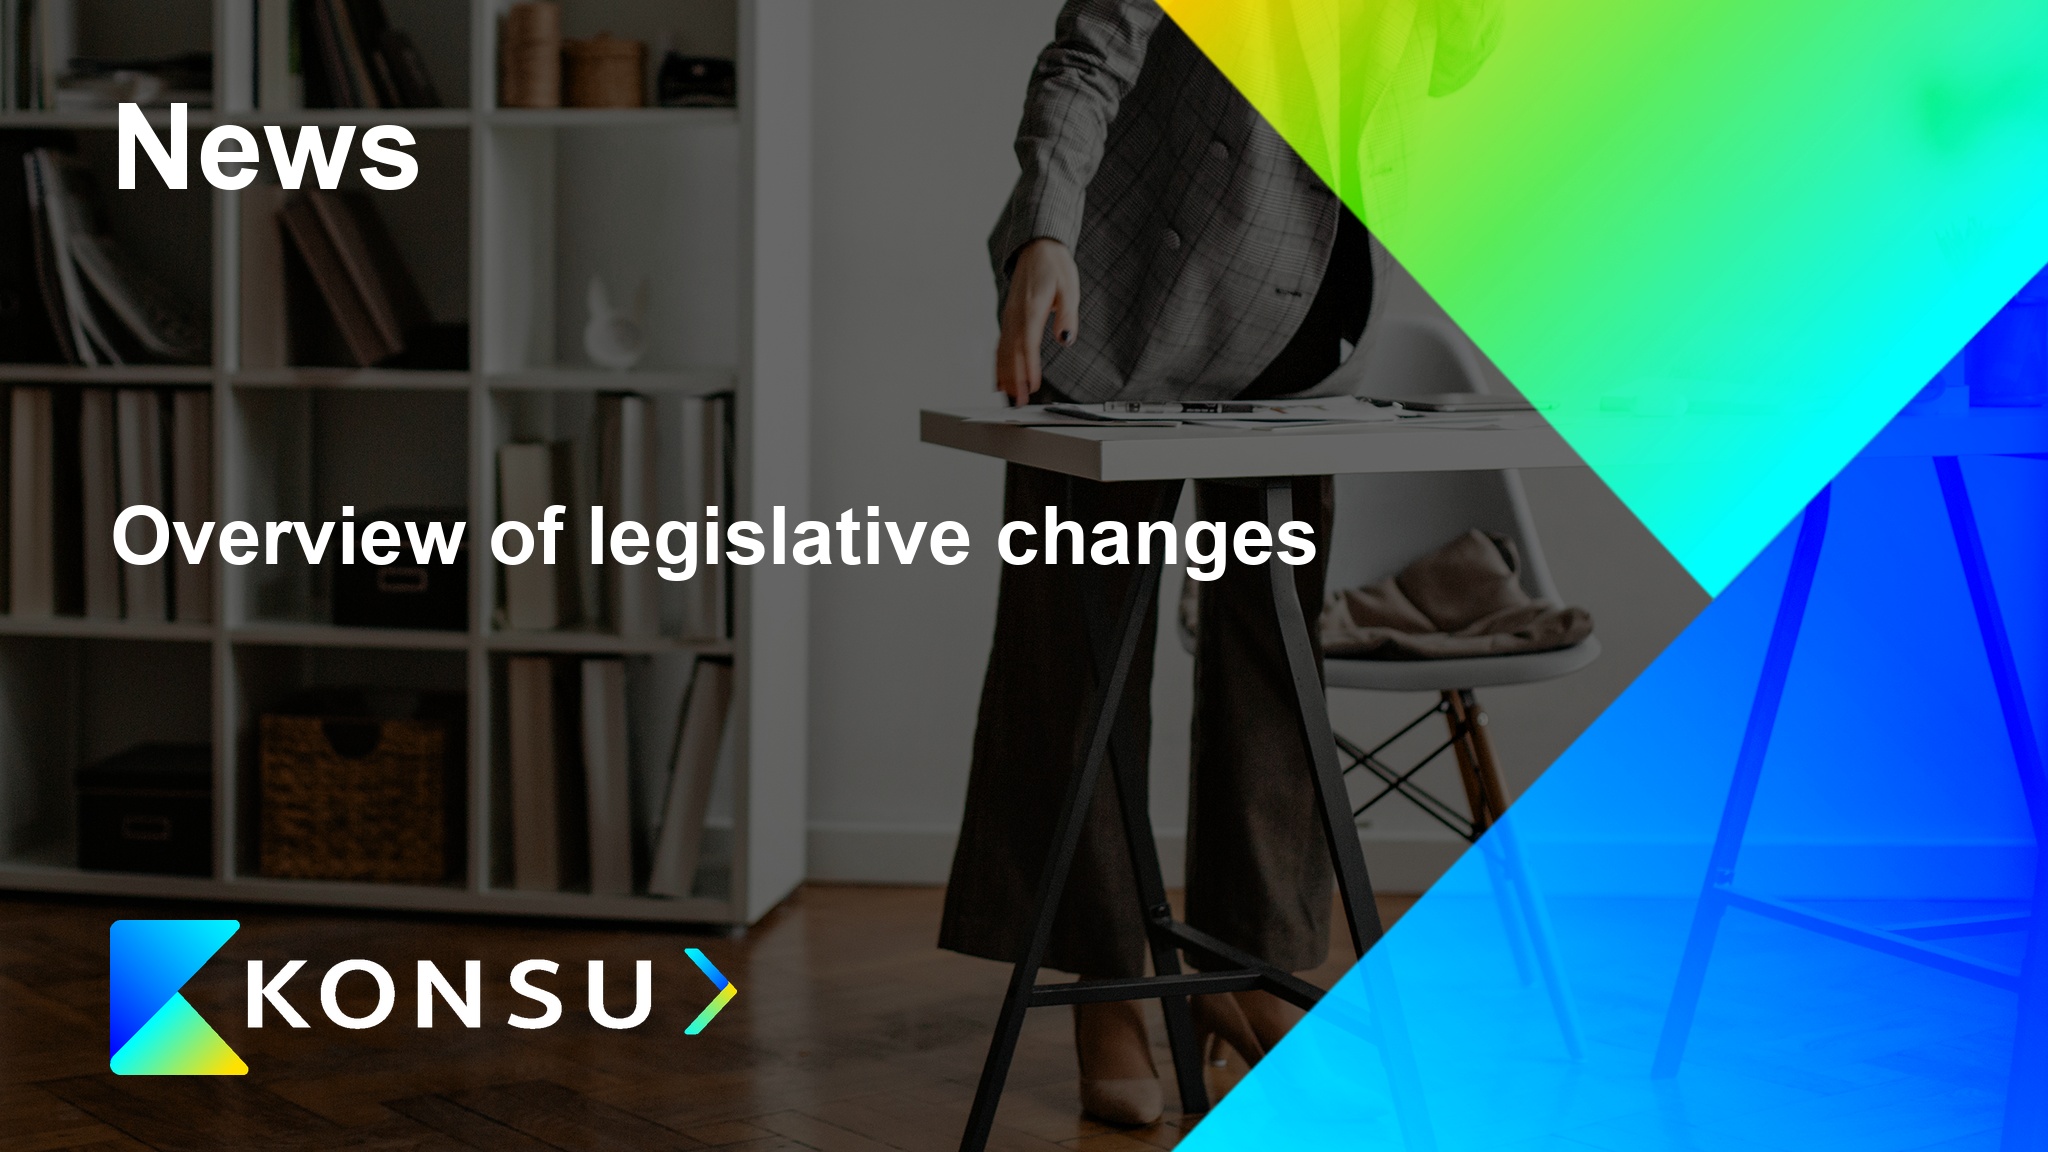 Overview legislative changes en konsu outsourcing consulting ru 